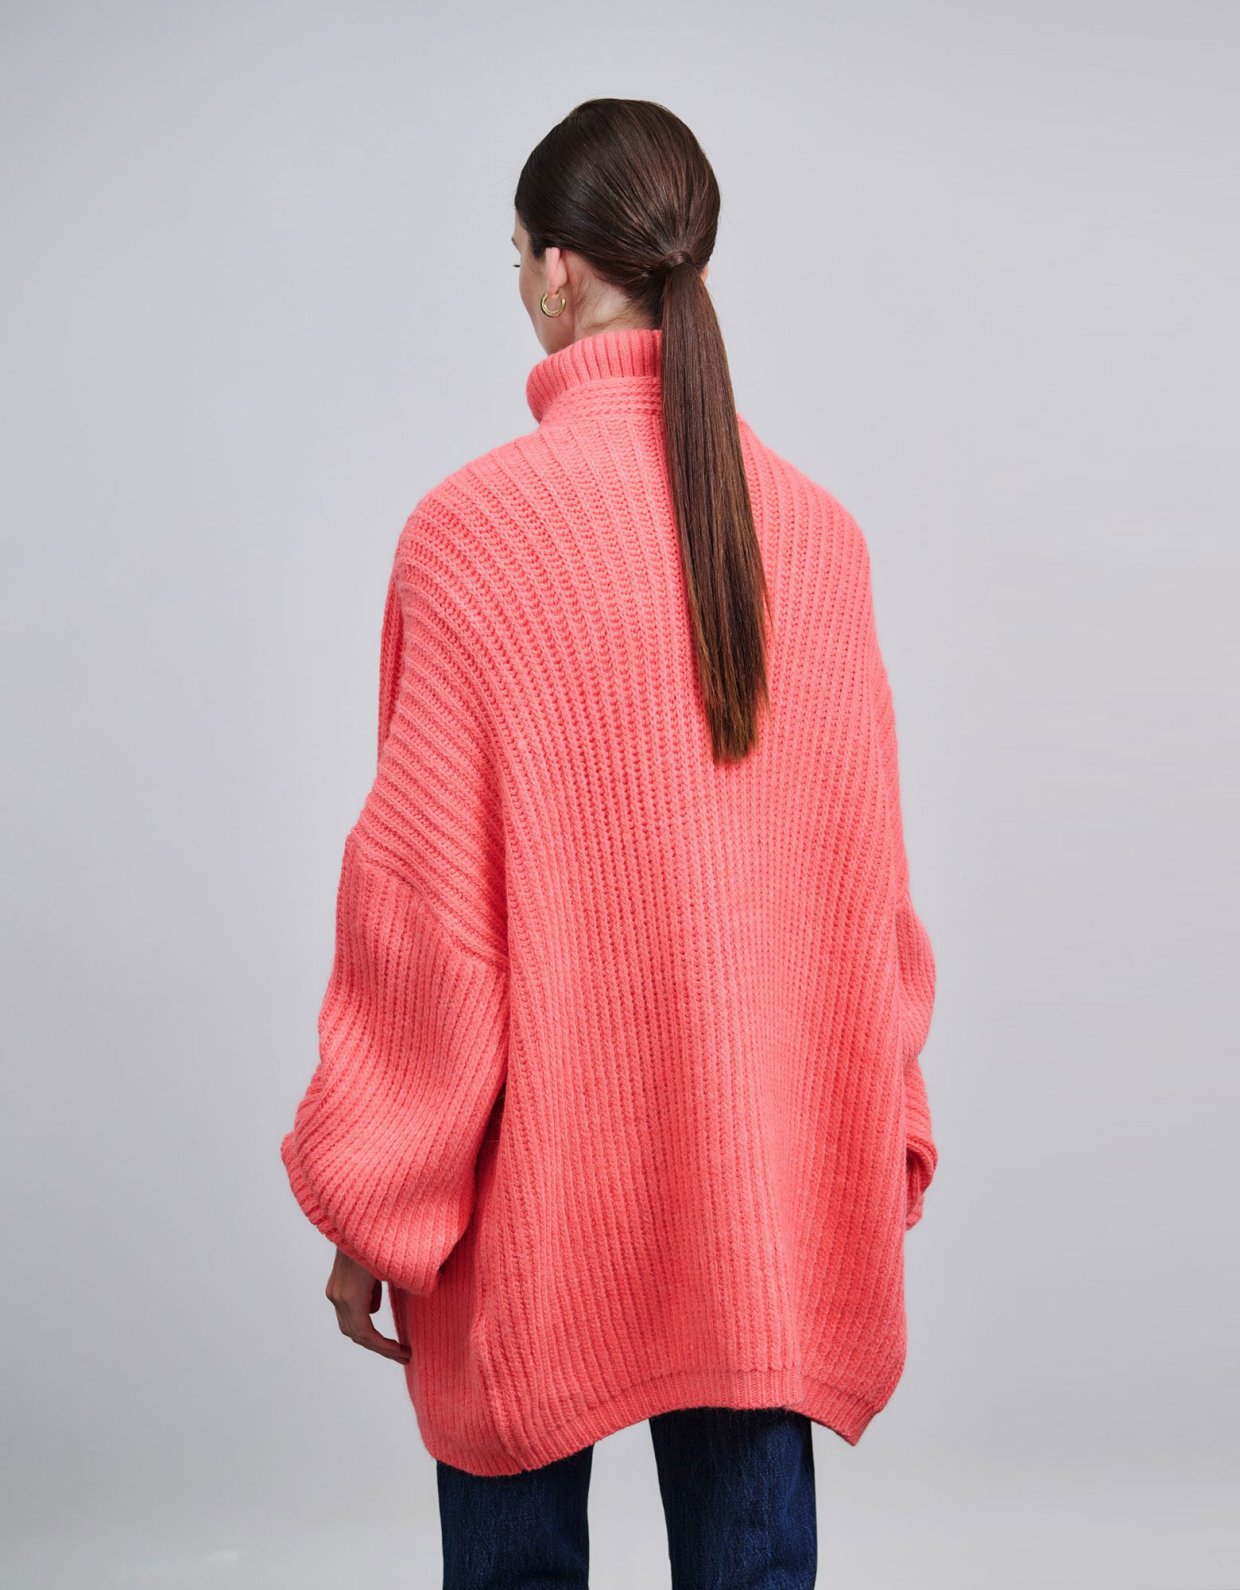 Combos Knitwear Oversized cardigan pink